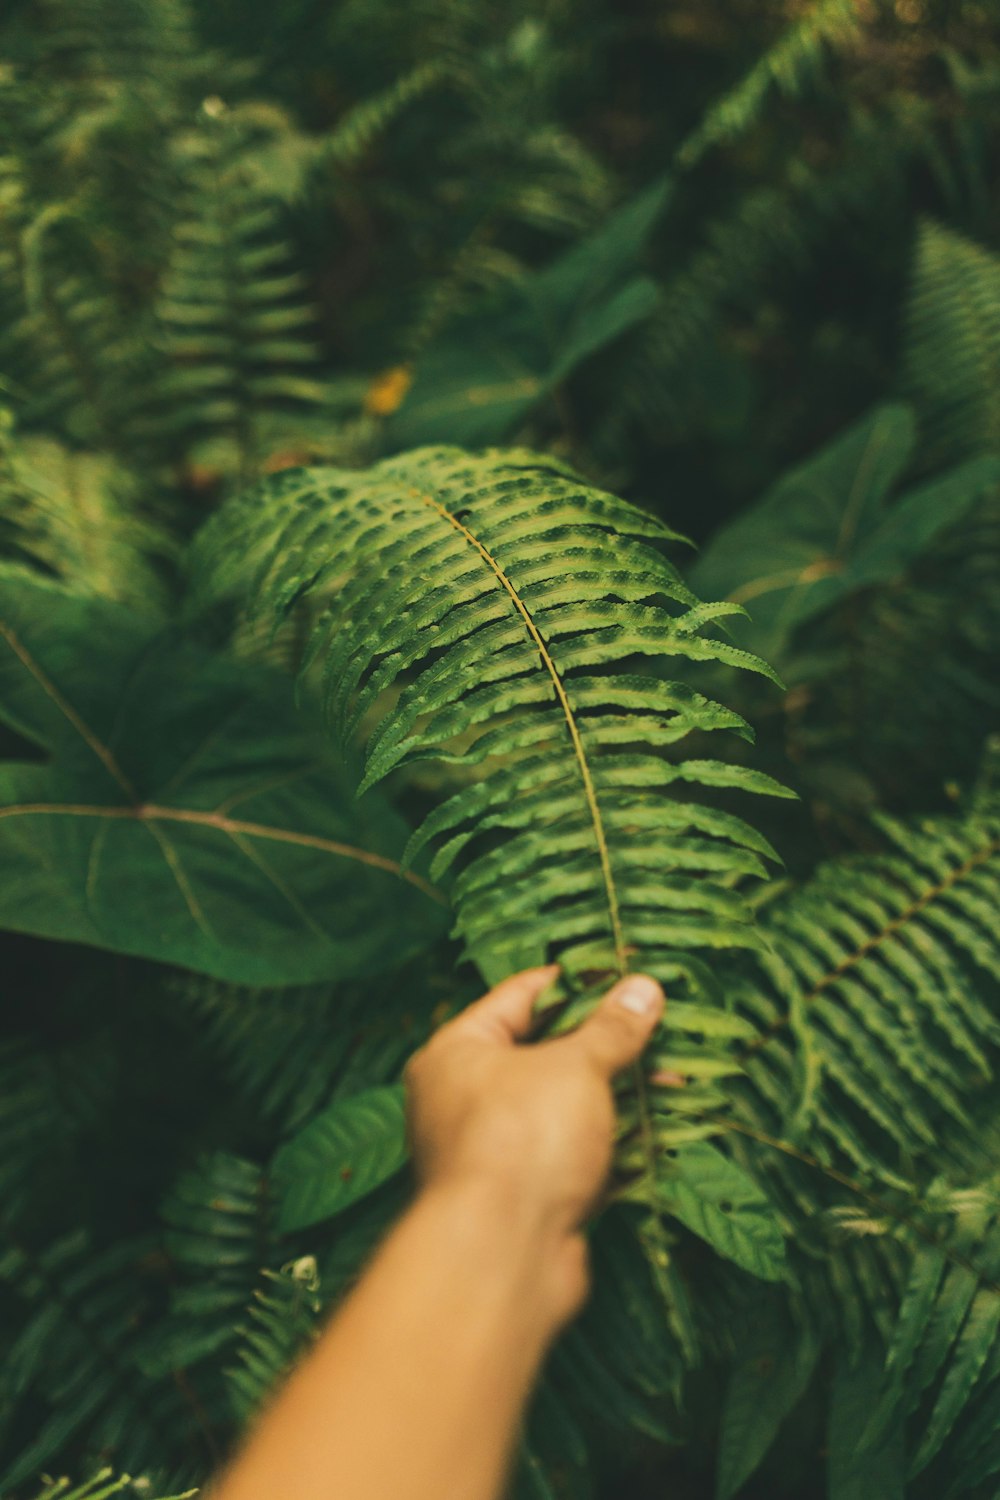 shallow focus photo of fern plants